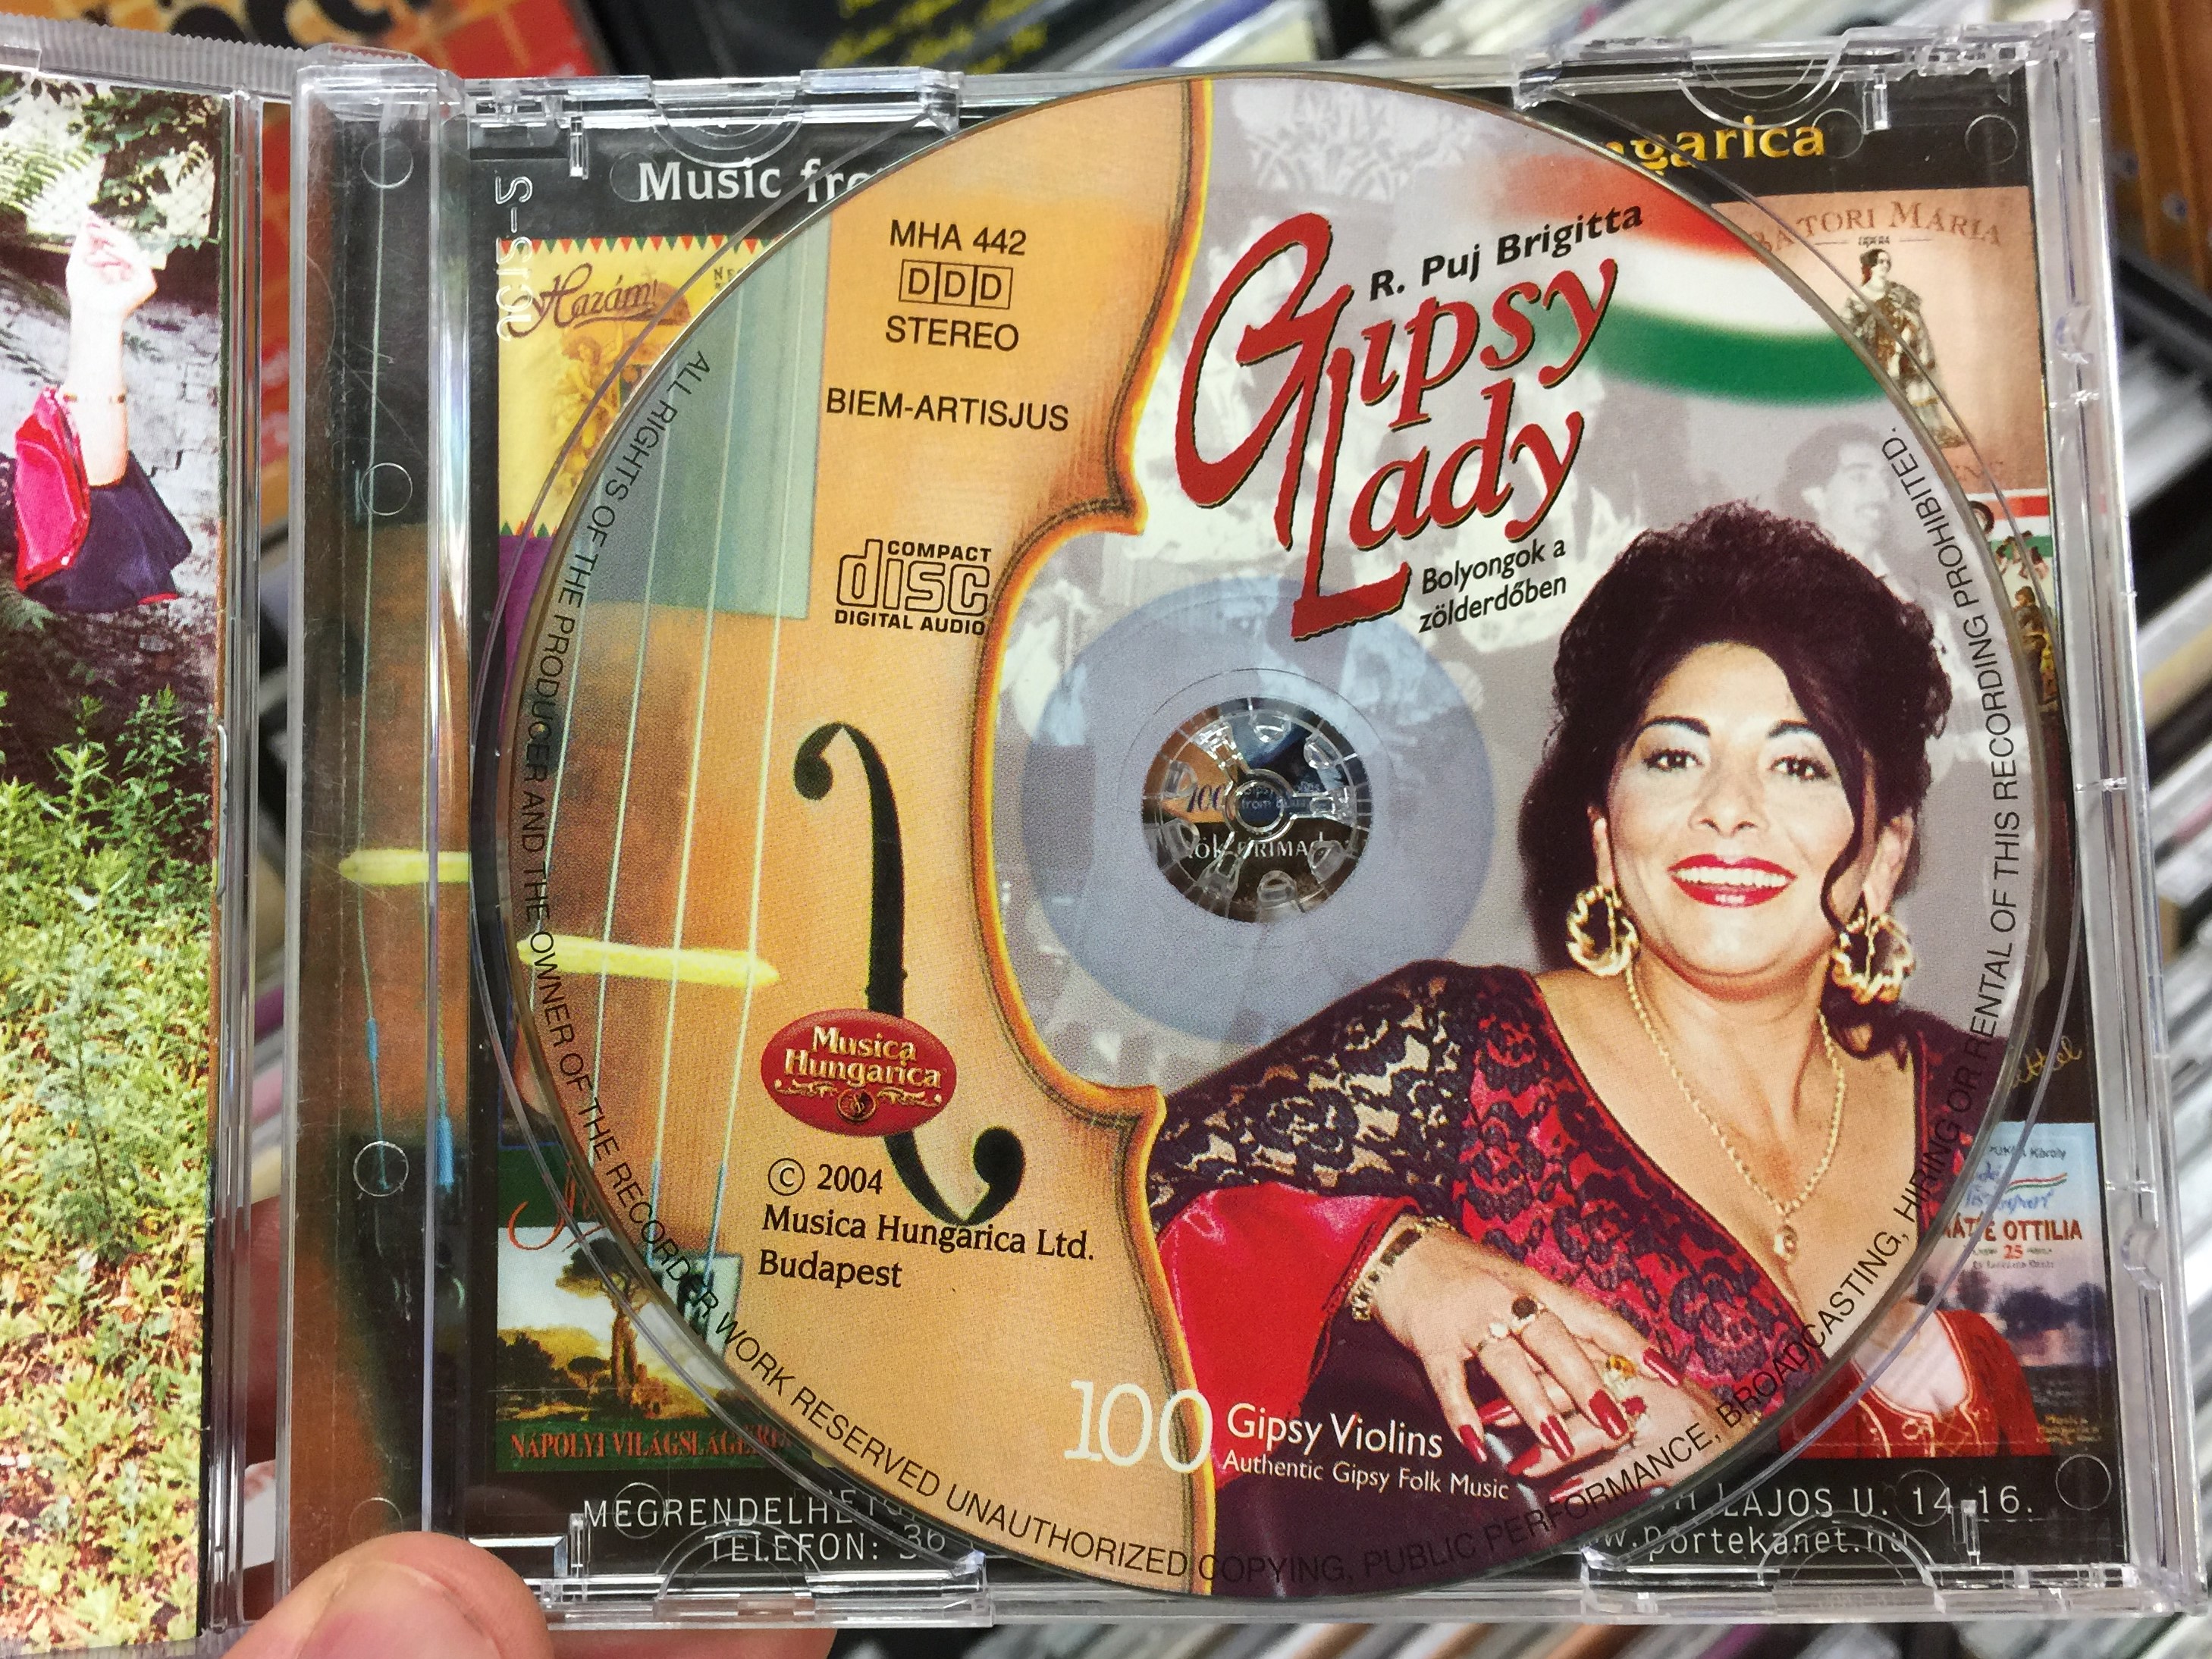 r.-puj-brigitta-gipsy-lady-bolyongok-a-zolderdoben-100-gipsy-violins-authentic-gispy-folk-music-musica-hungarica-audio-cd-2004-stereo-mha-442-3-.jpg